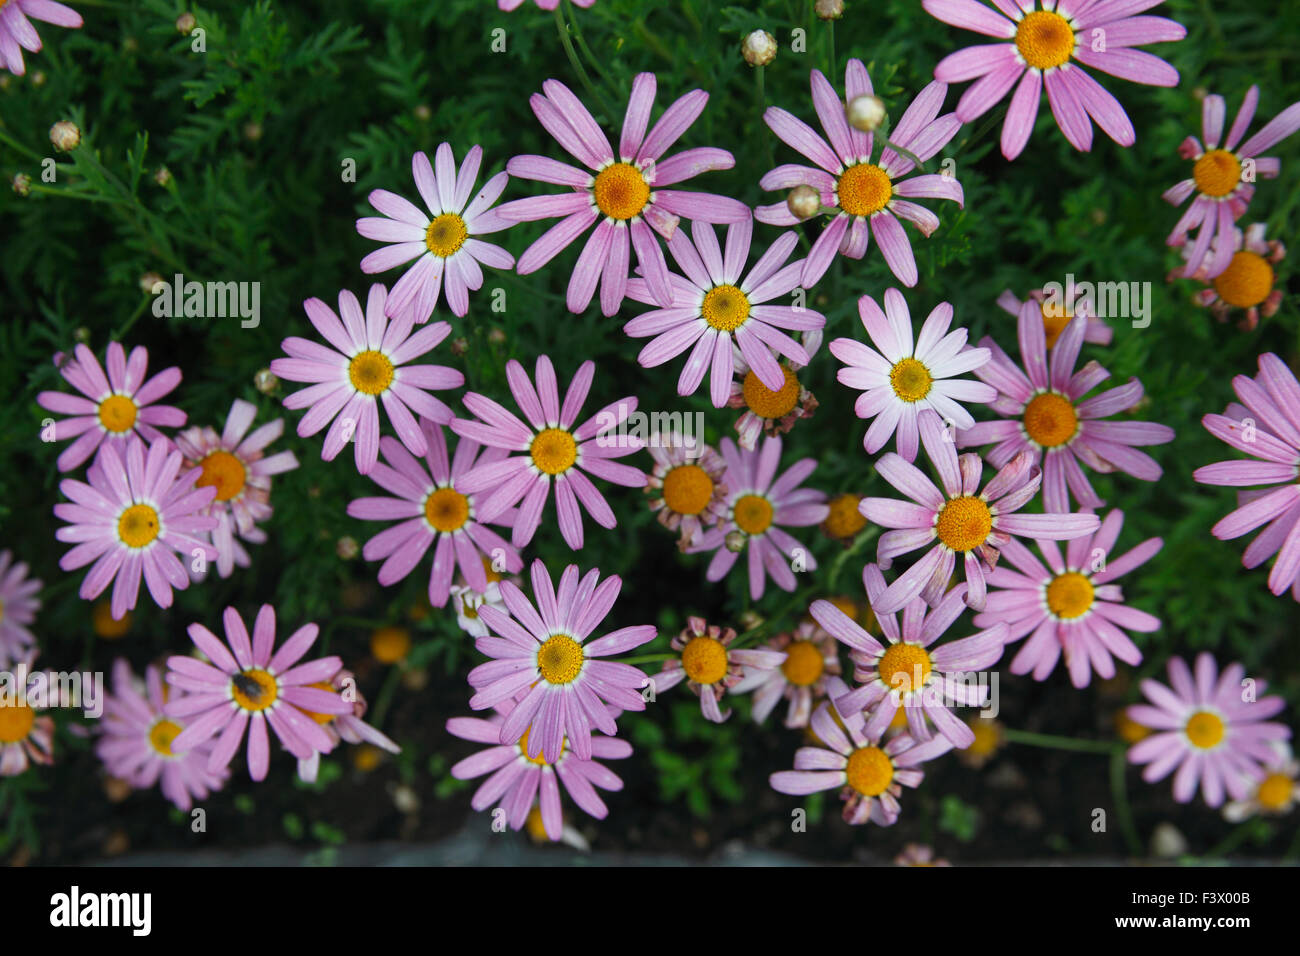 Agryanthemum 'Weymouth Surprise' plant in flower Stock Photo